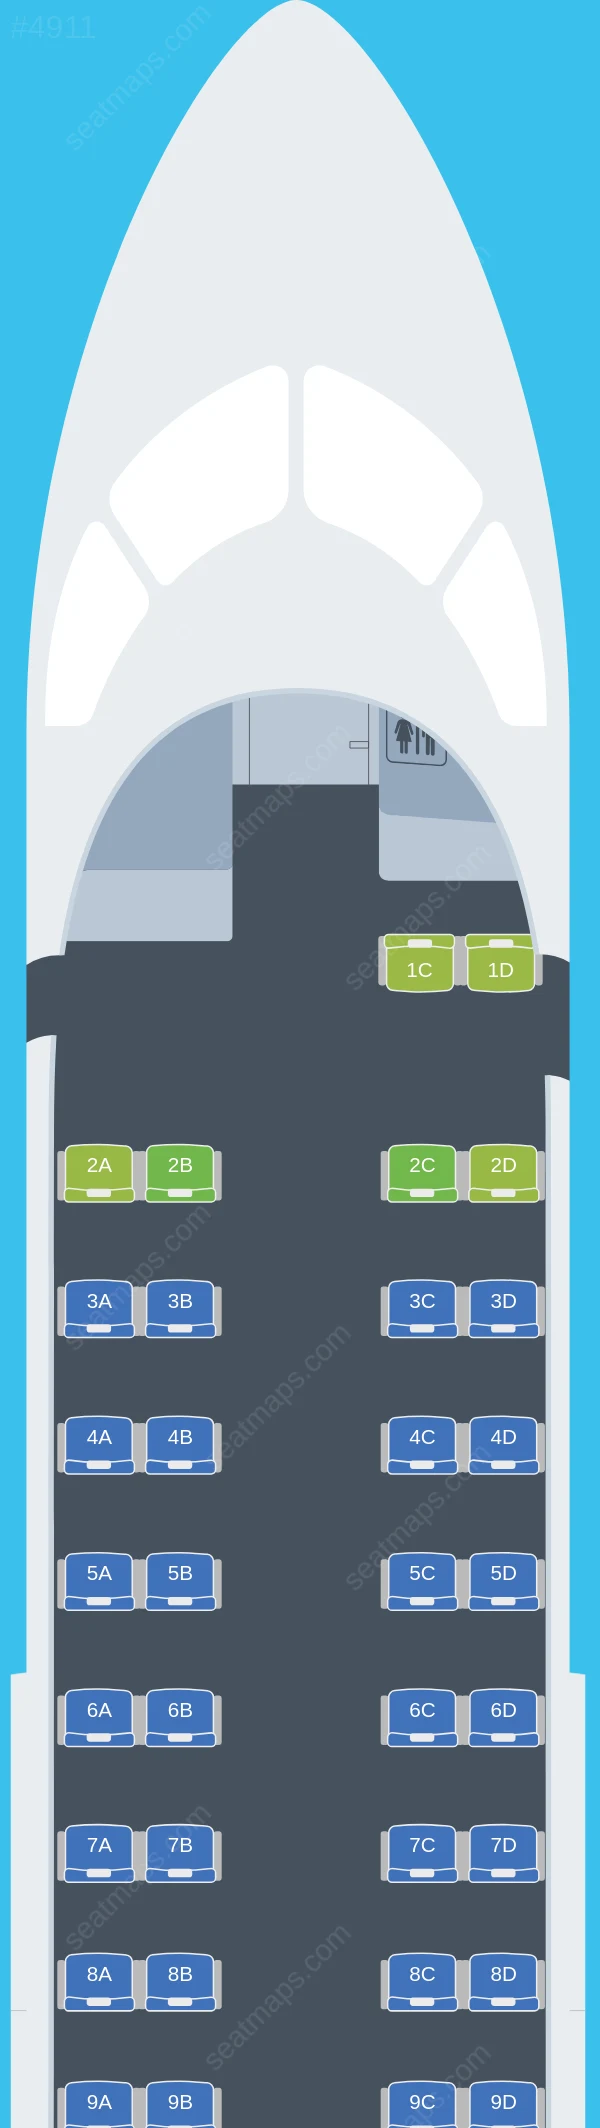 Regent Airways De Havilland Q300 seatmap preview